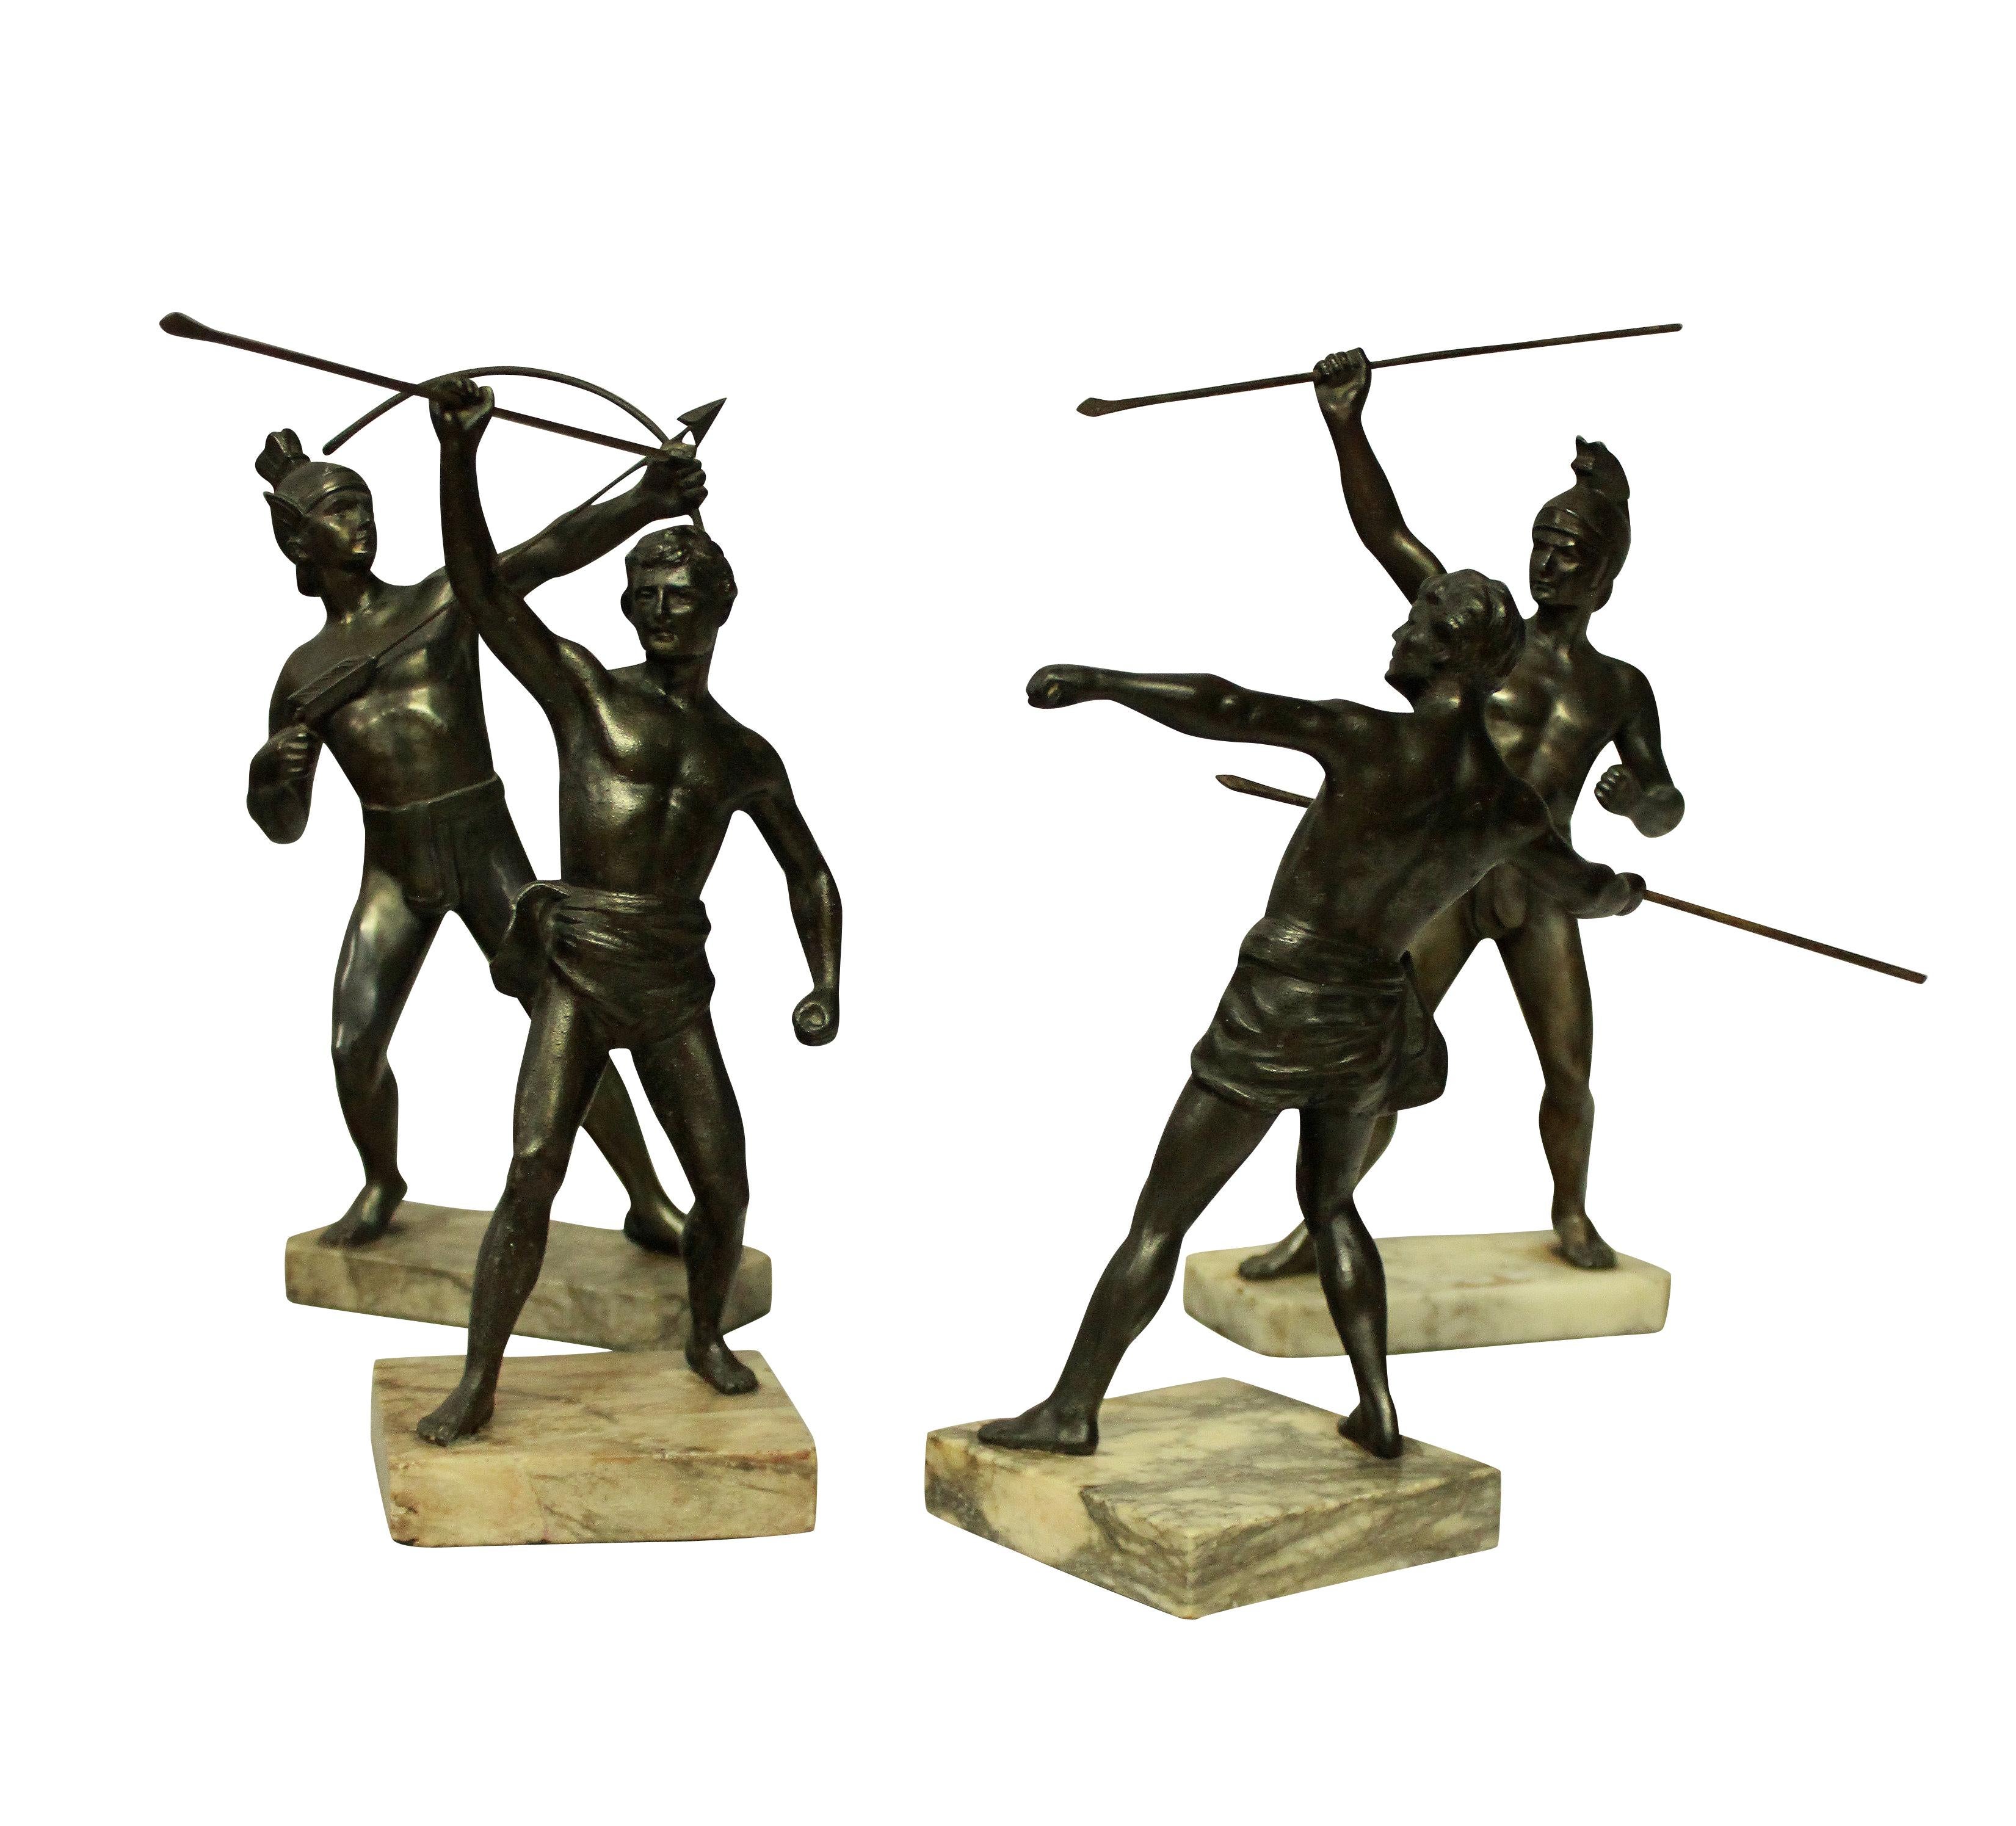 A group of four bronzed spelter Greek & Trojan warrior figures, on marble plinths.